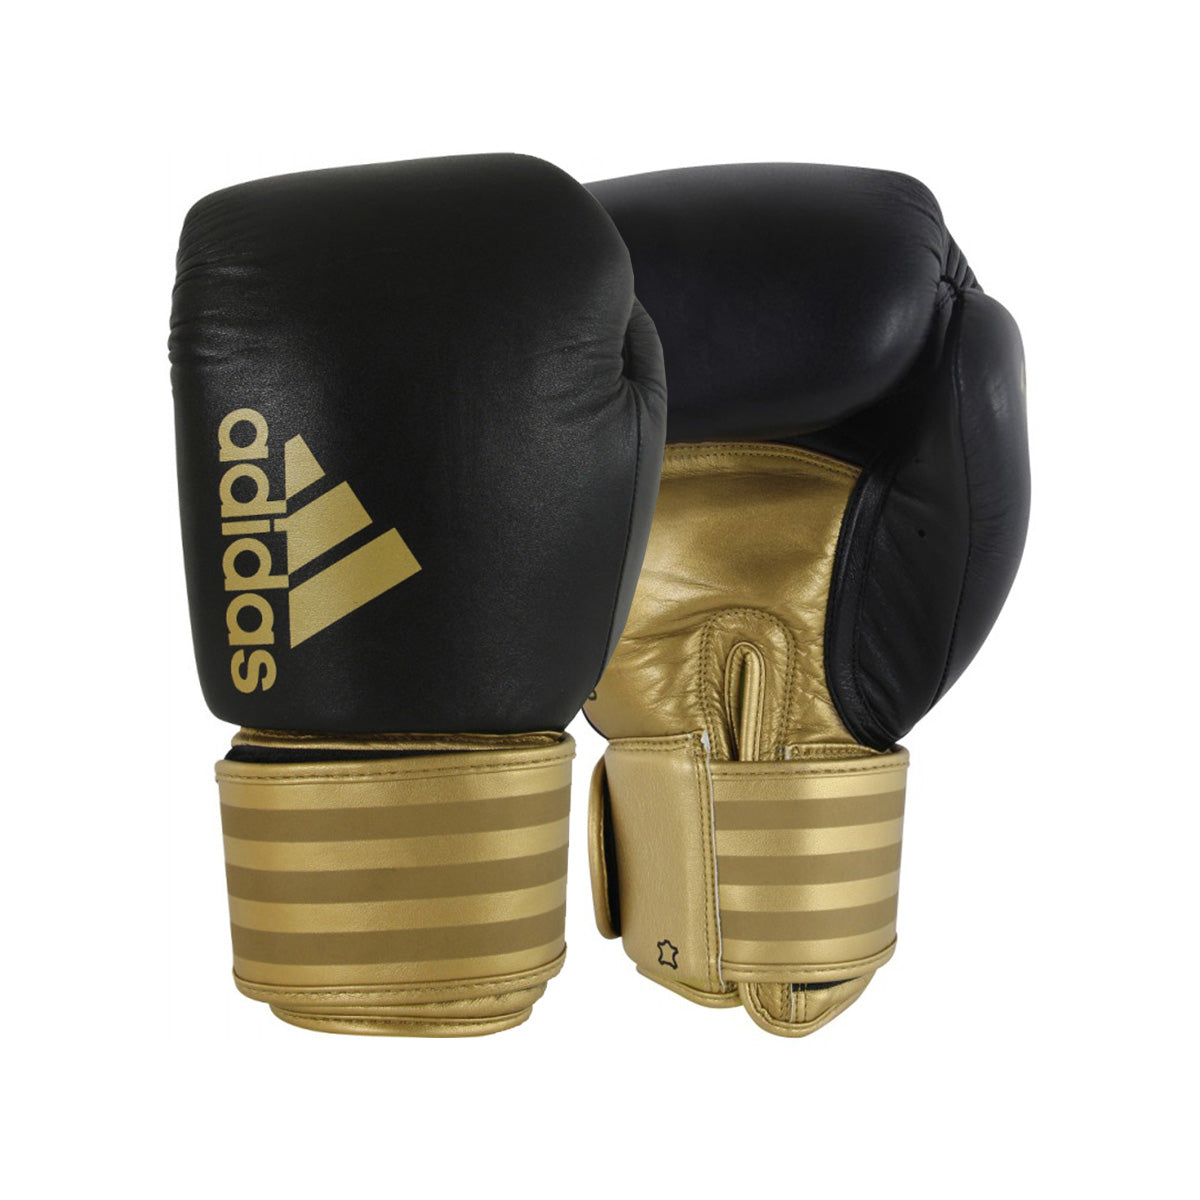 HYBRID 200 GLOVES ADIDAS-Boxing gloves-Adidas®-18-Canada Fighting